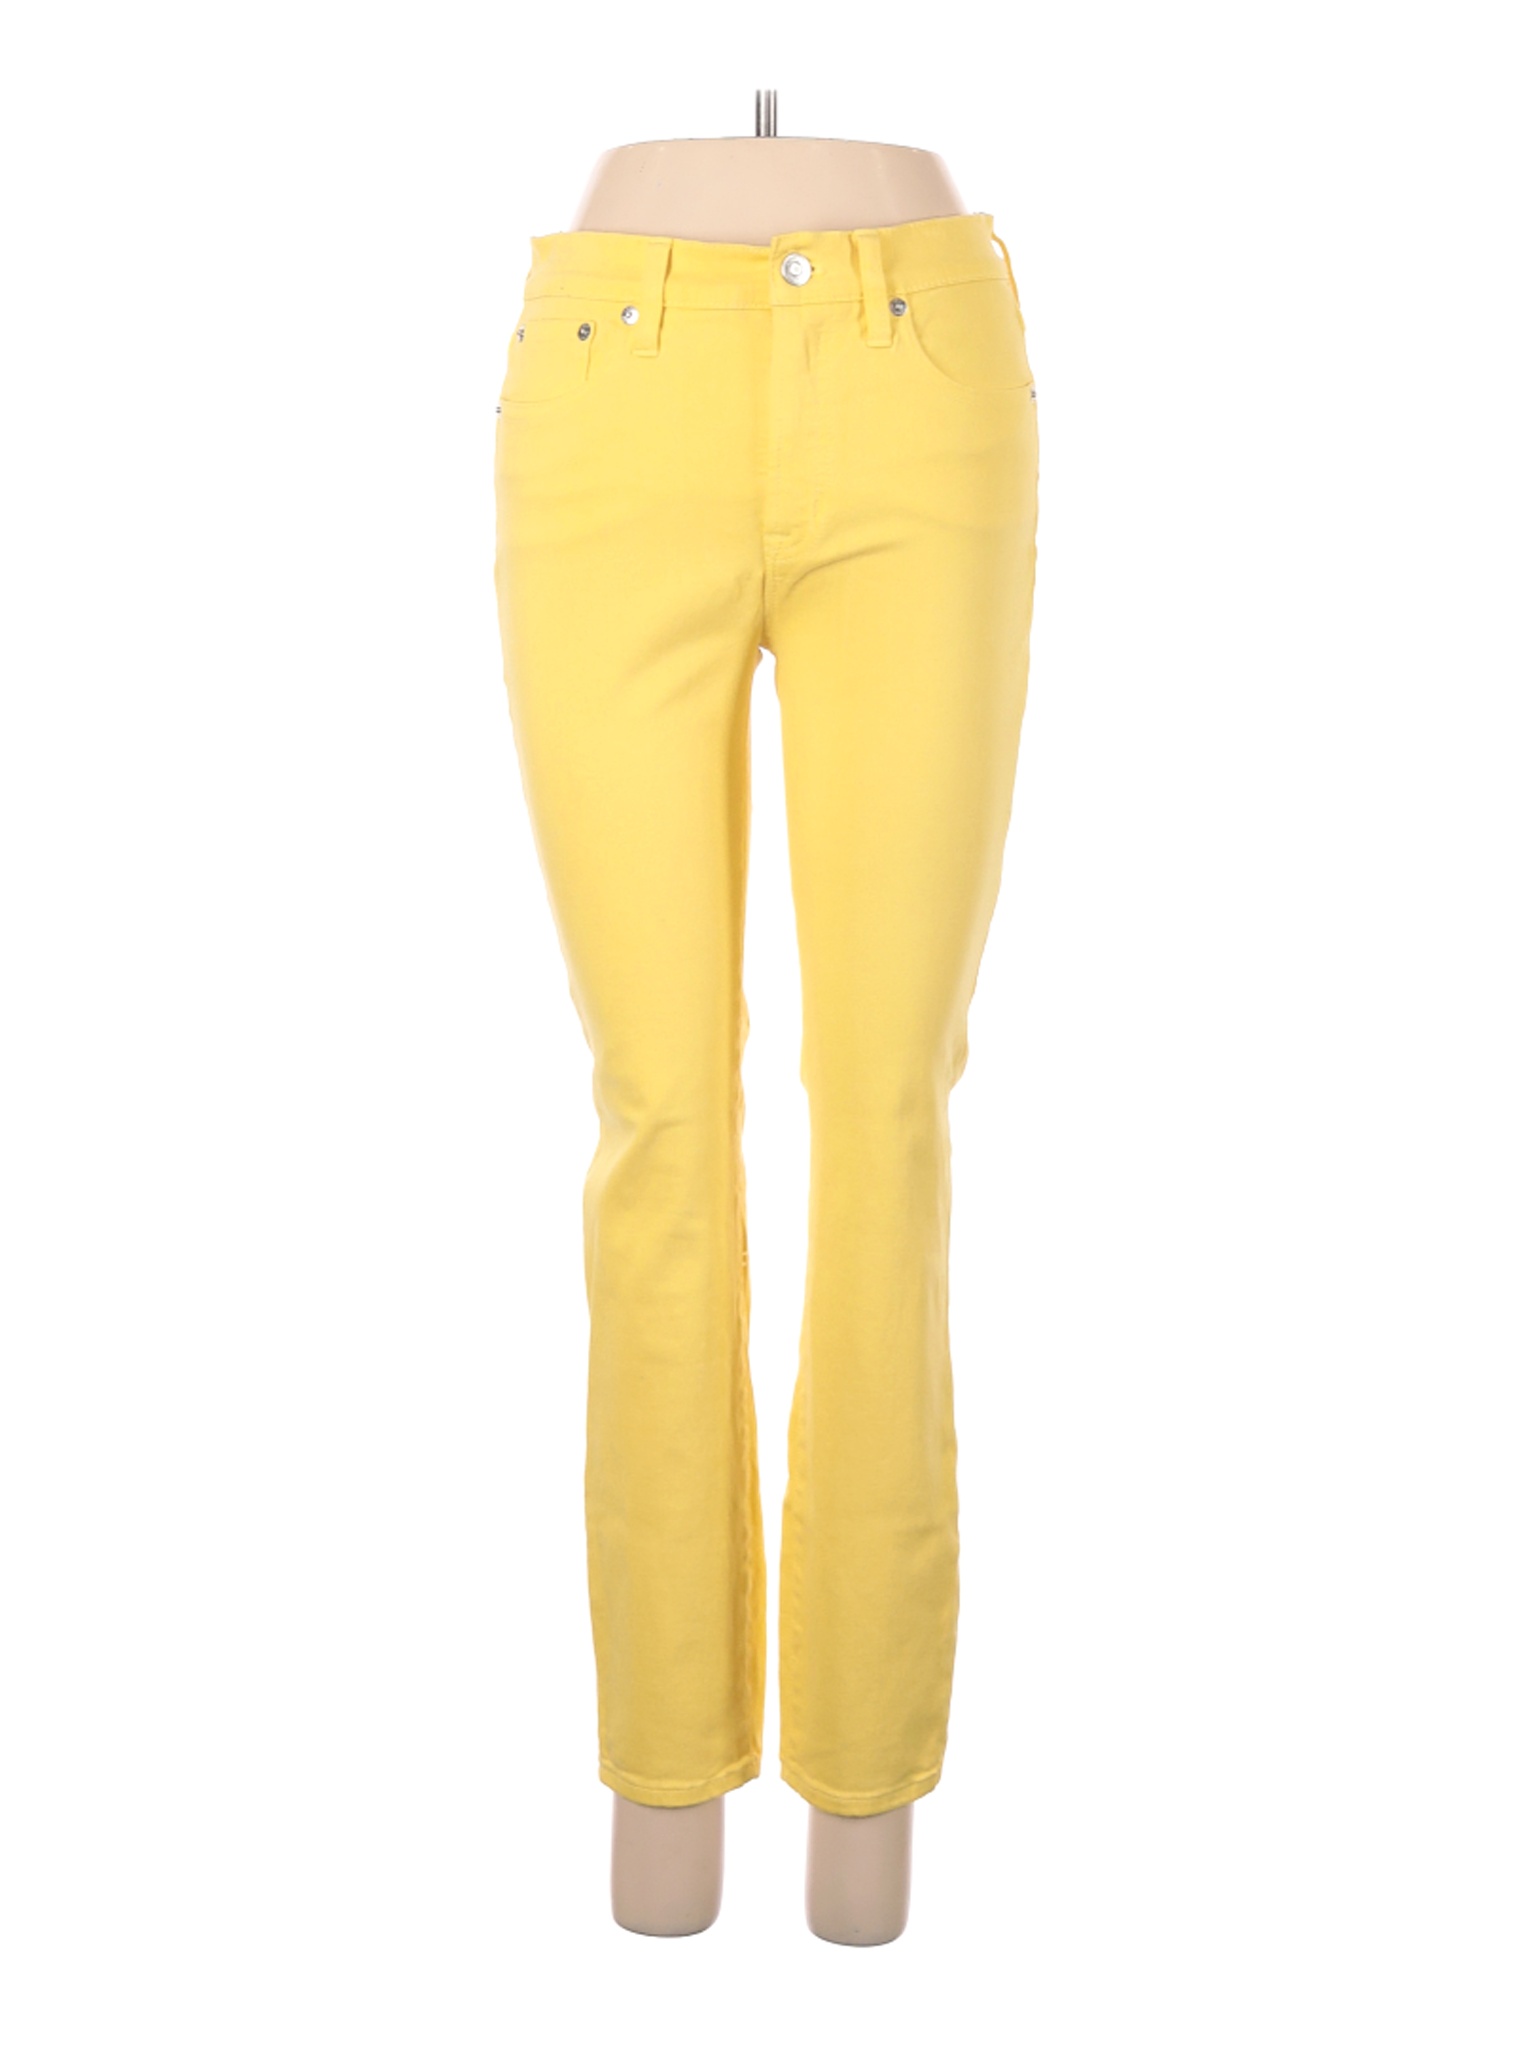 J.Crew Women Yellow Jeans 27W | eBay